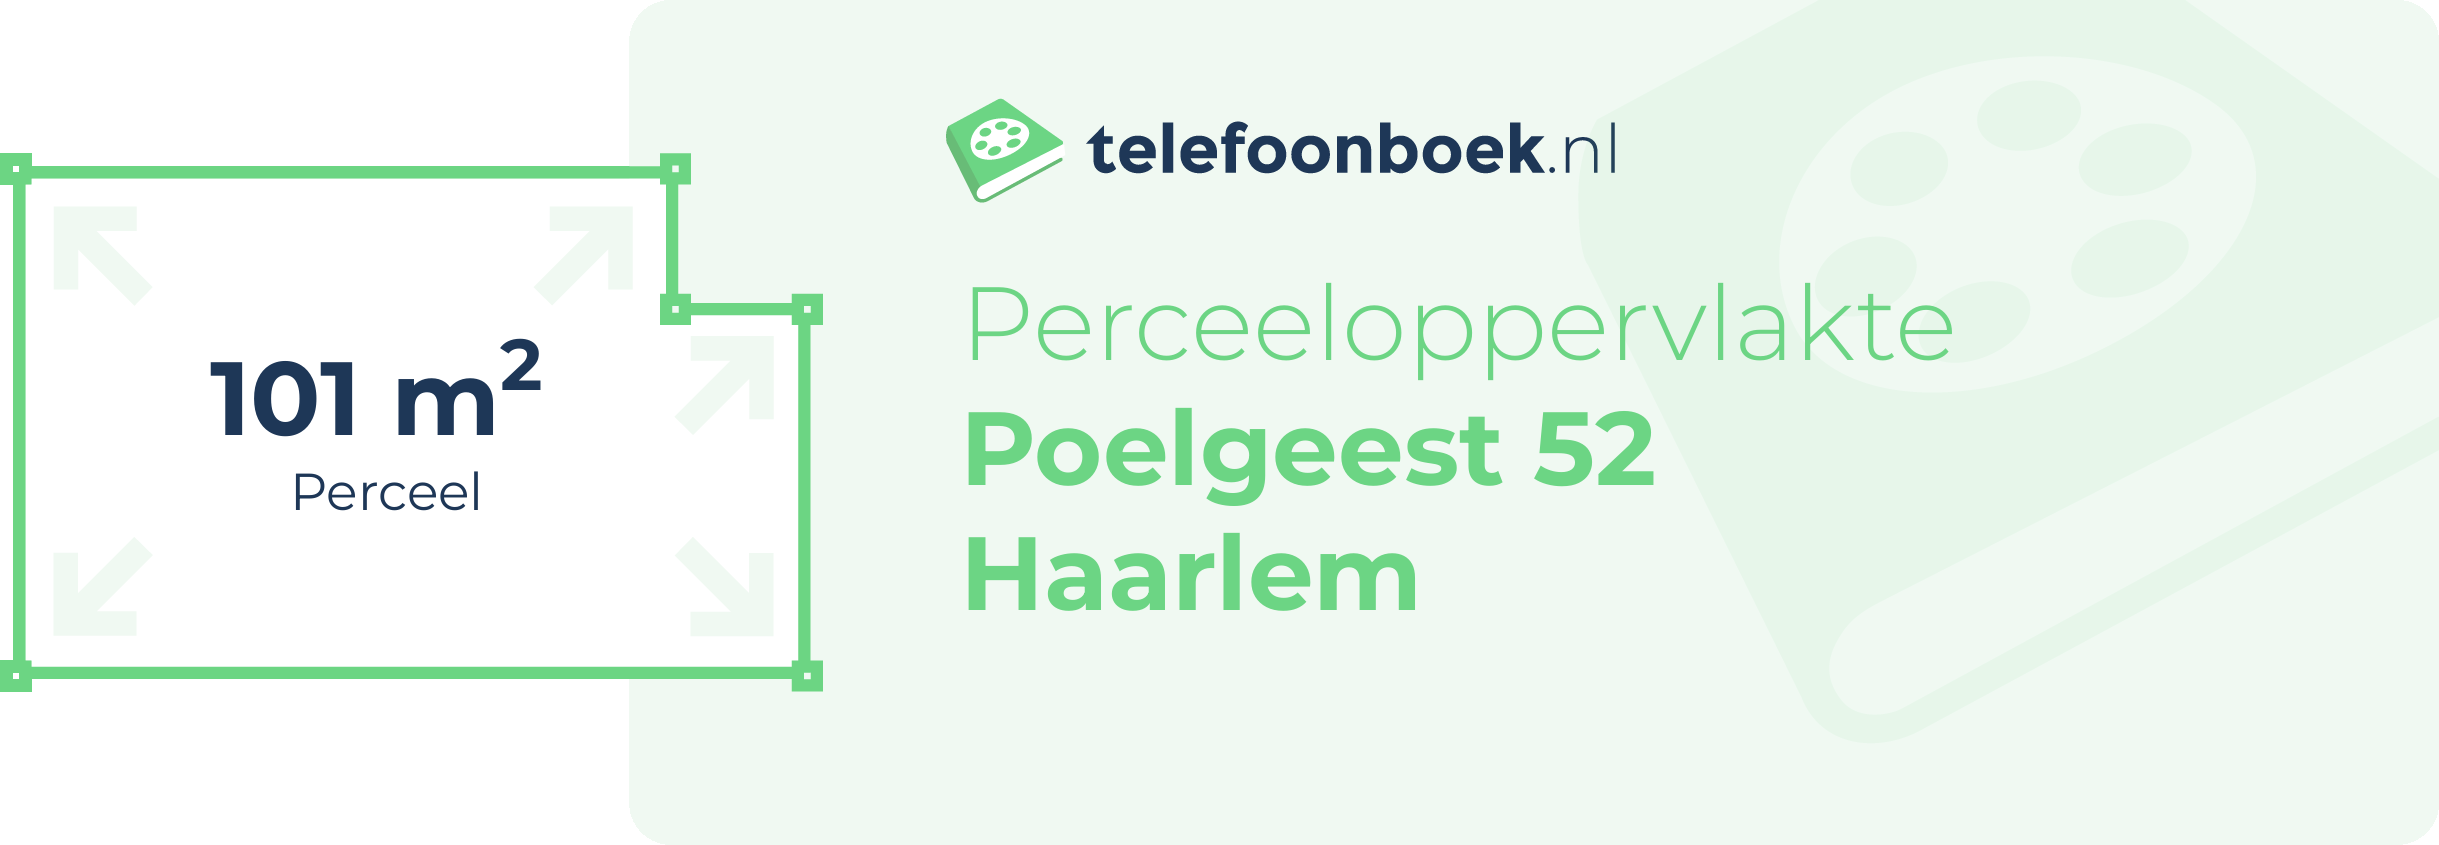 Perceeloppervlakte Poelgeest 52 Haarlem